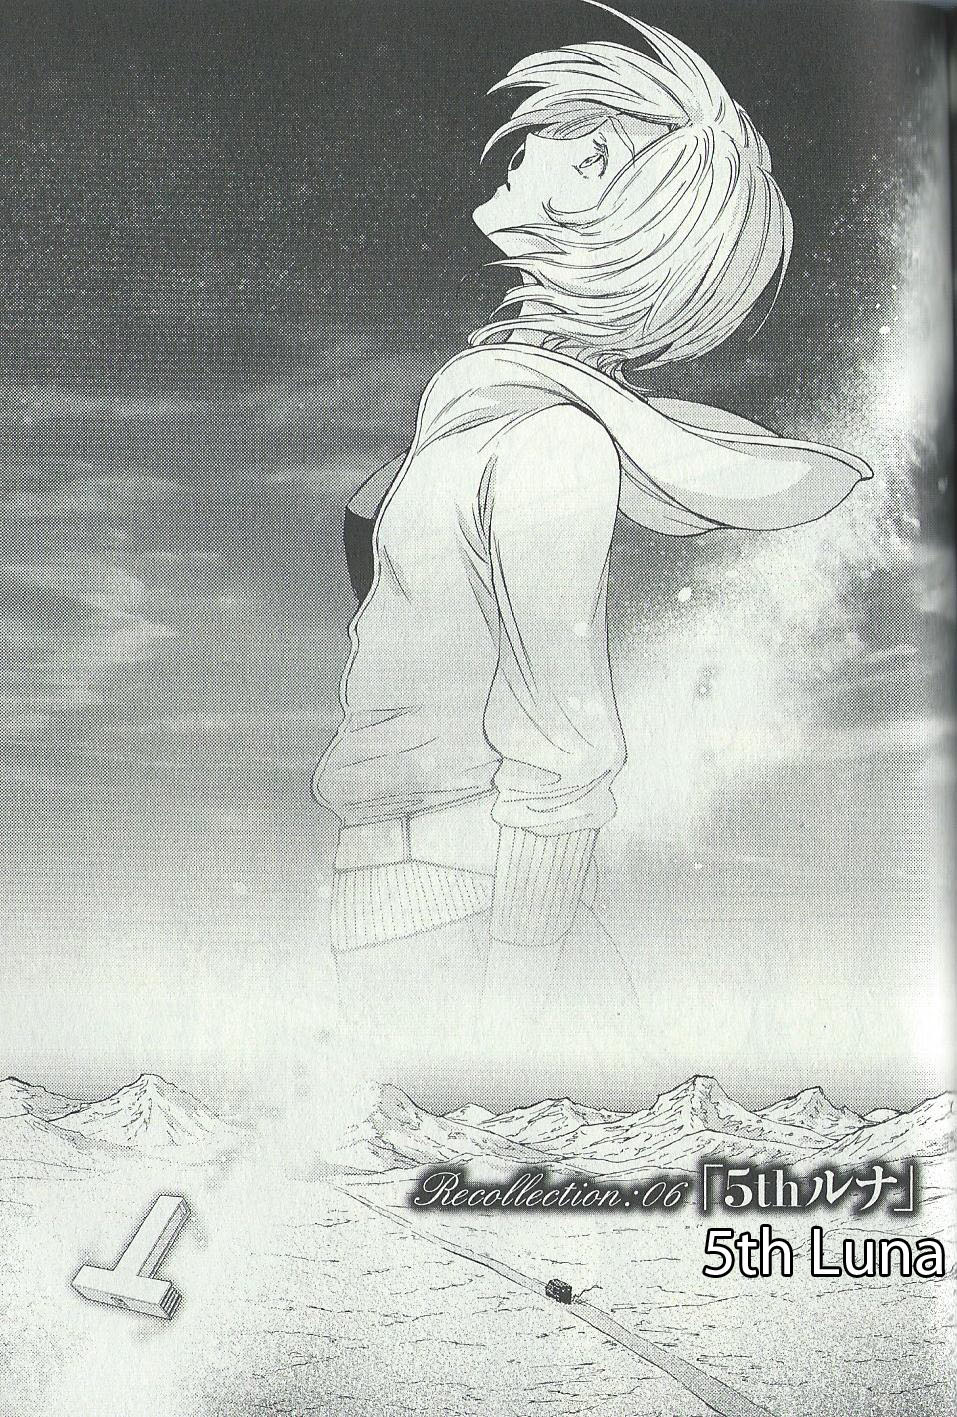 Kidou Senshi Gundam Gyakushuu no Char: Beyond the Time Vol. 1 Ch. 6 5th Luna